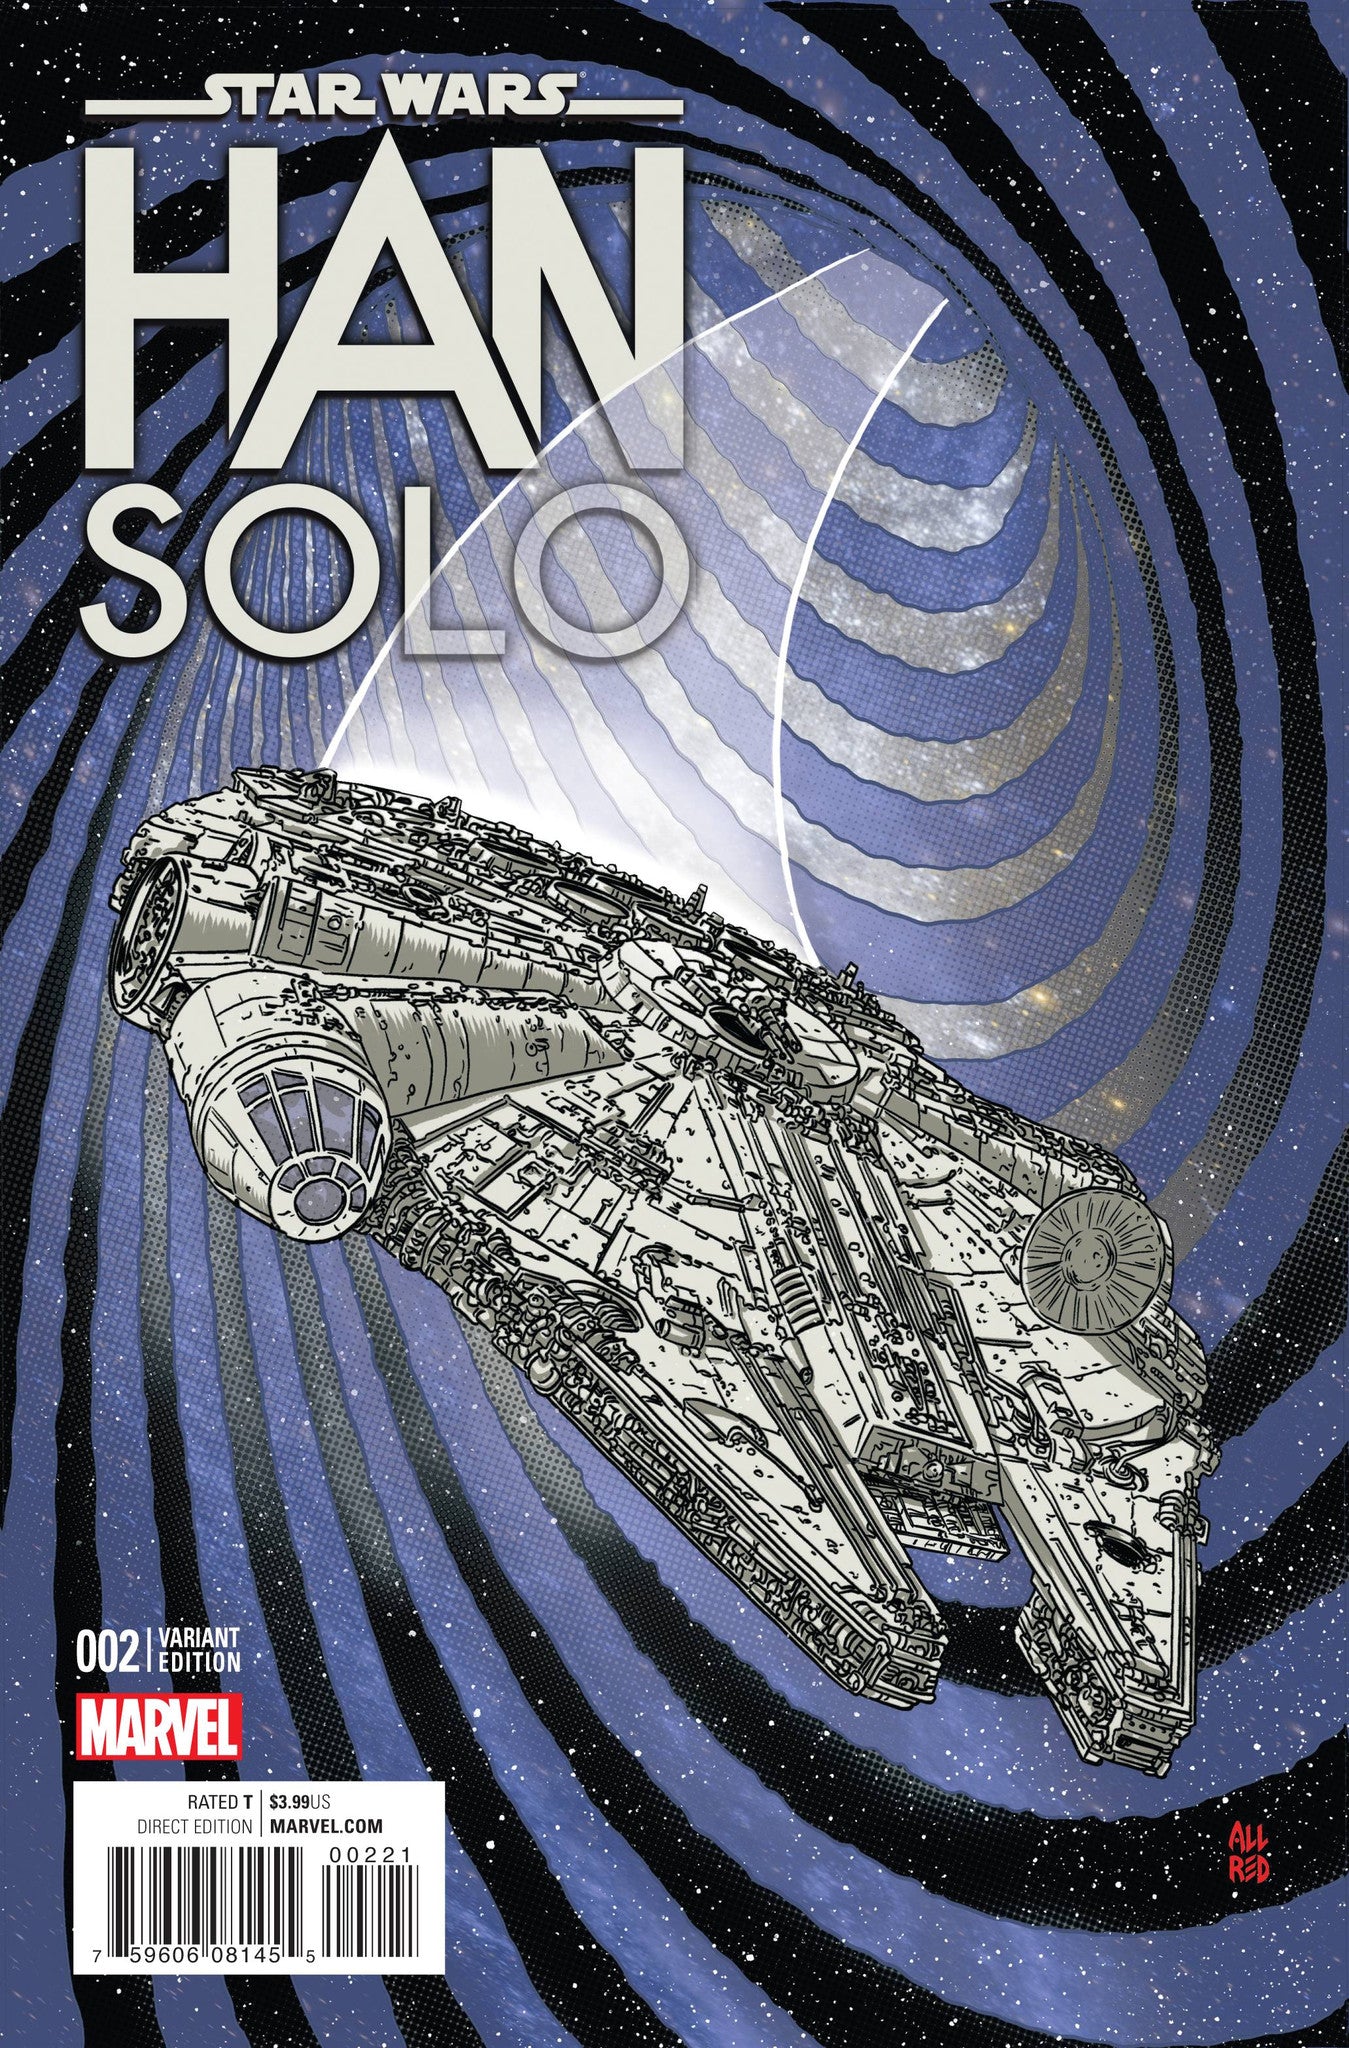 STAR WARS HAN SOLO #2 (OF 5) MILLENIUM FALCON VAR COVER